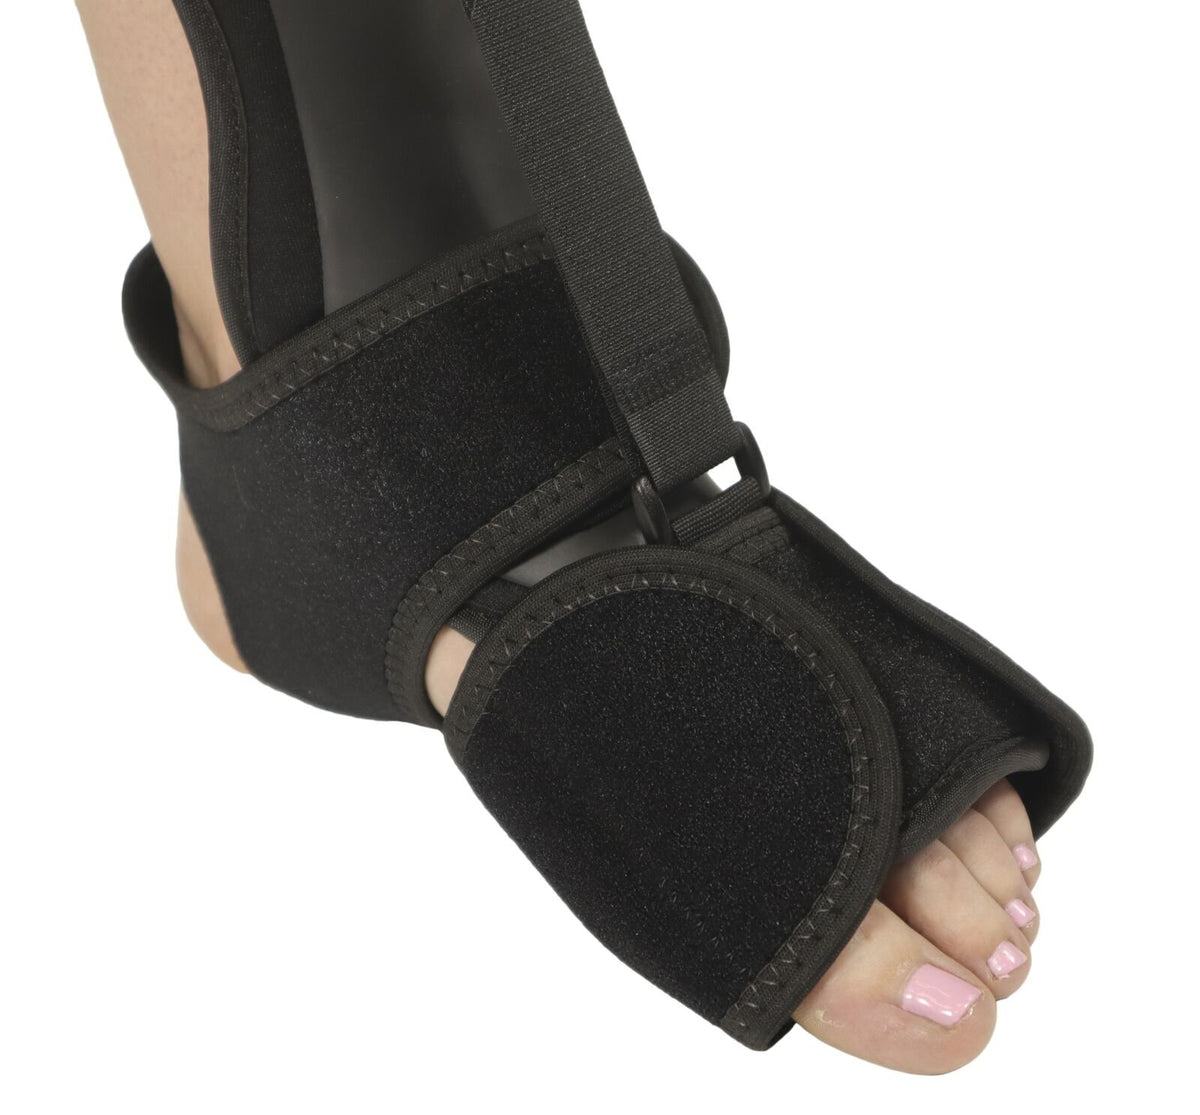 Comfort Dorsal Night Splint - Pain Relief from Plantar Fasciitis, Drop Foot, and Achilles Tendinitis